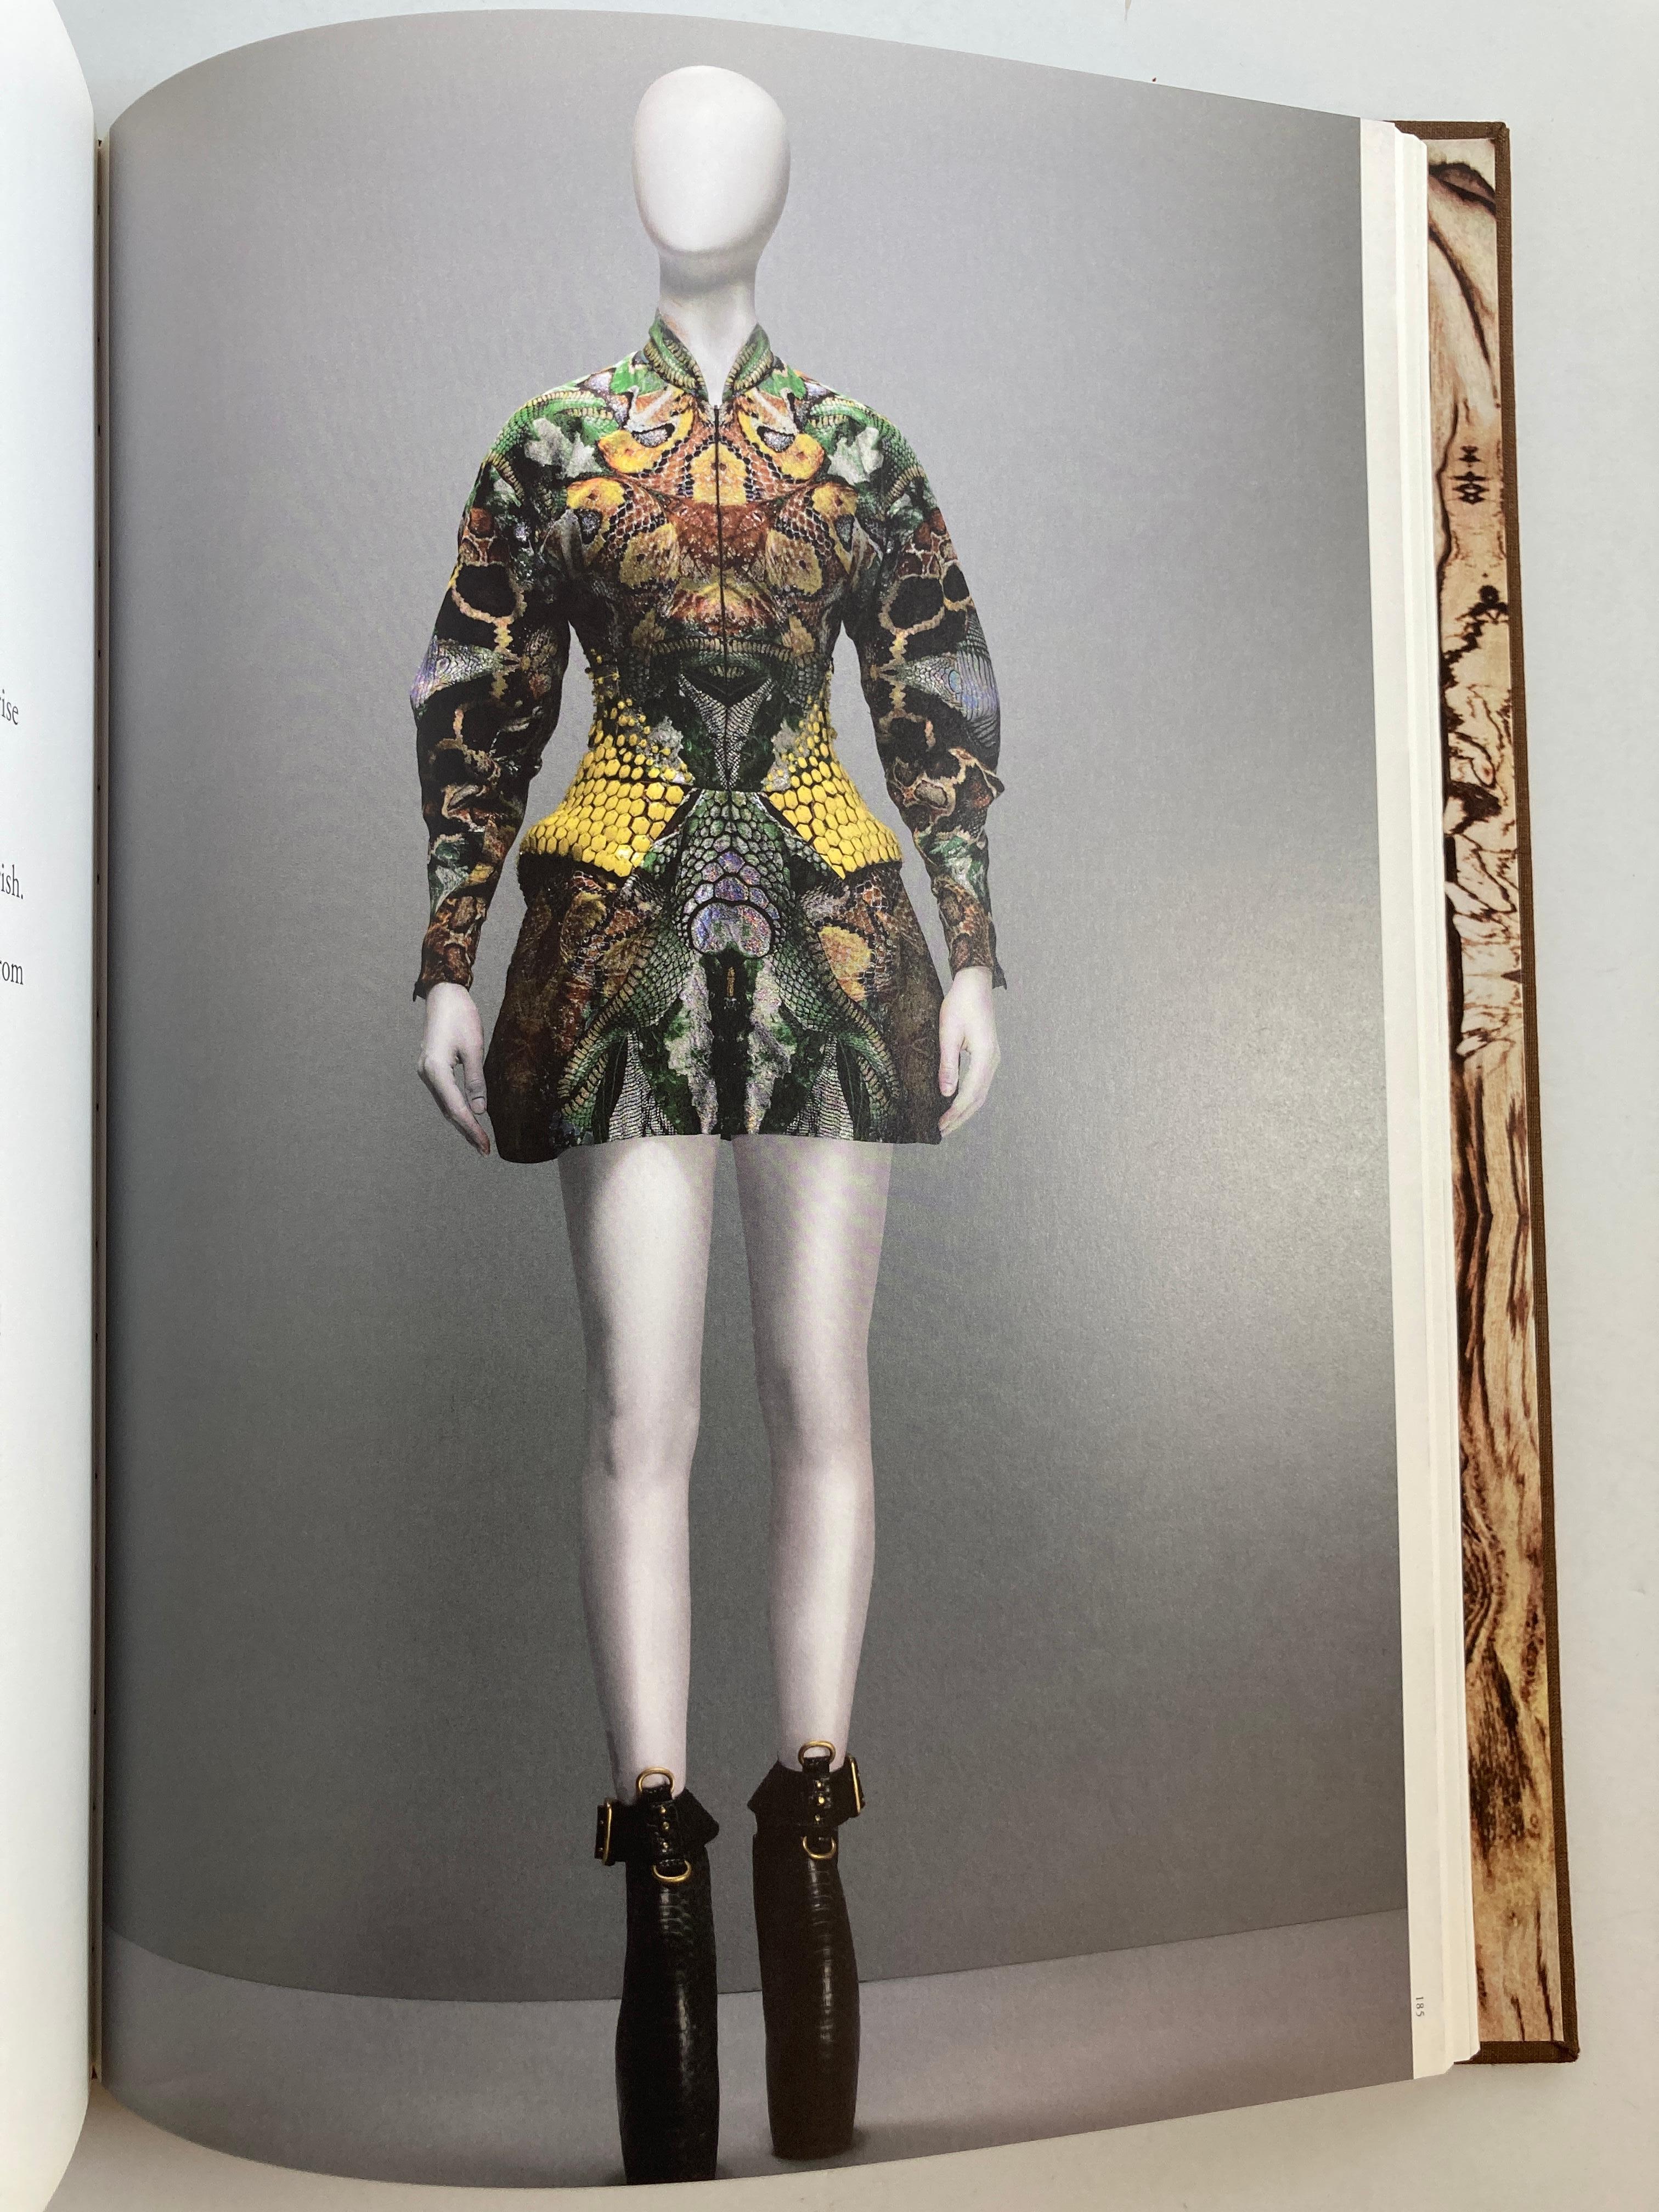 Alexander McQueen Savage Beauty Fashion Art Table Book 2